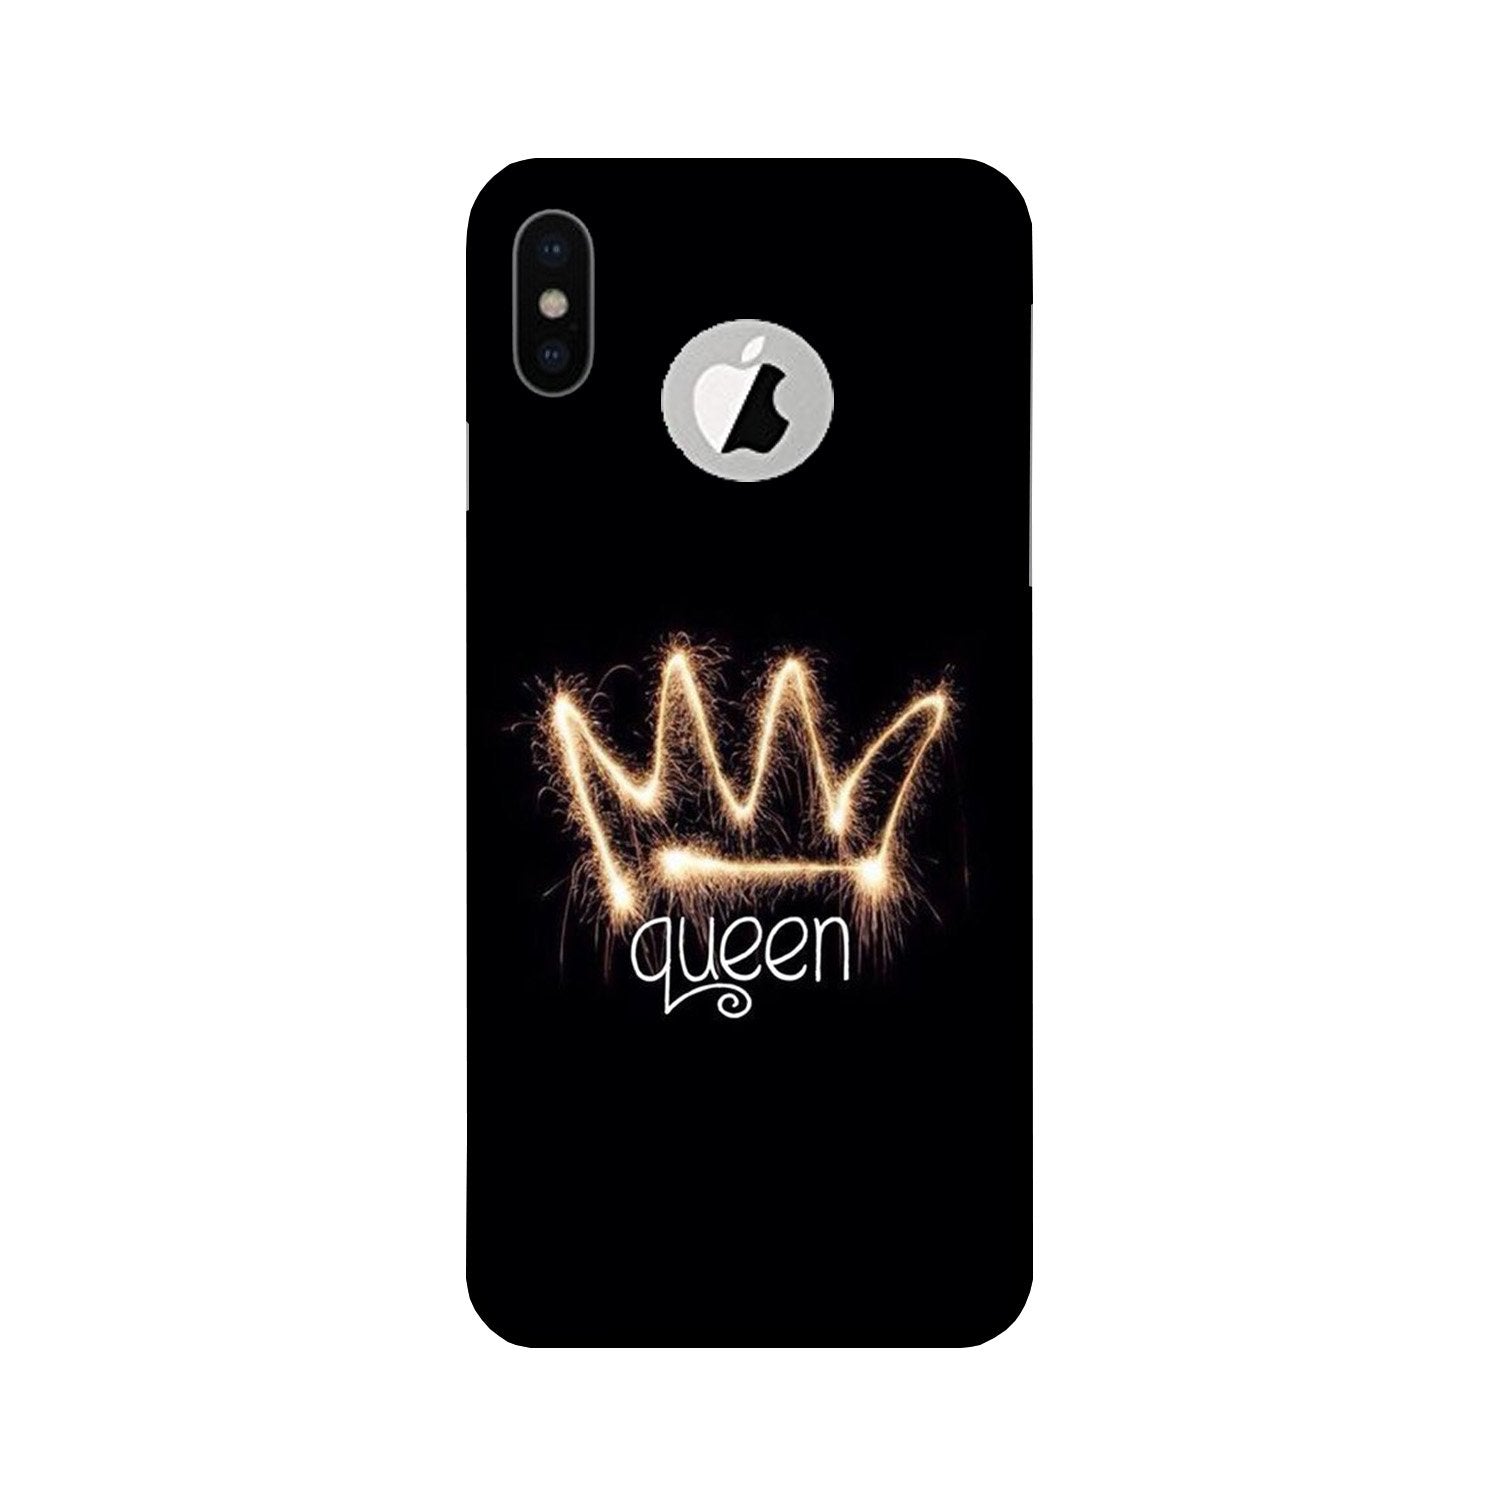 Queen Case for iPhone X logo cut (Design No. 270)